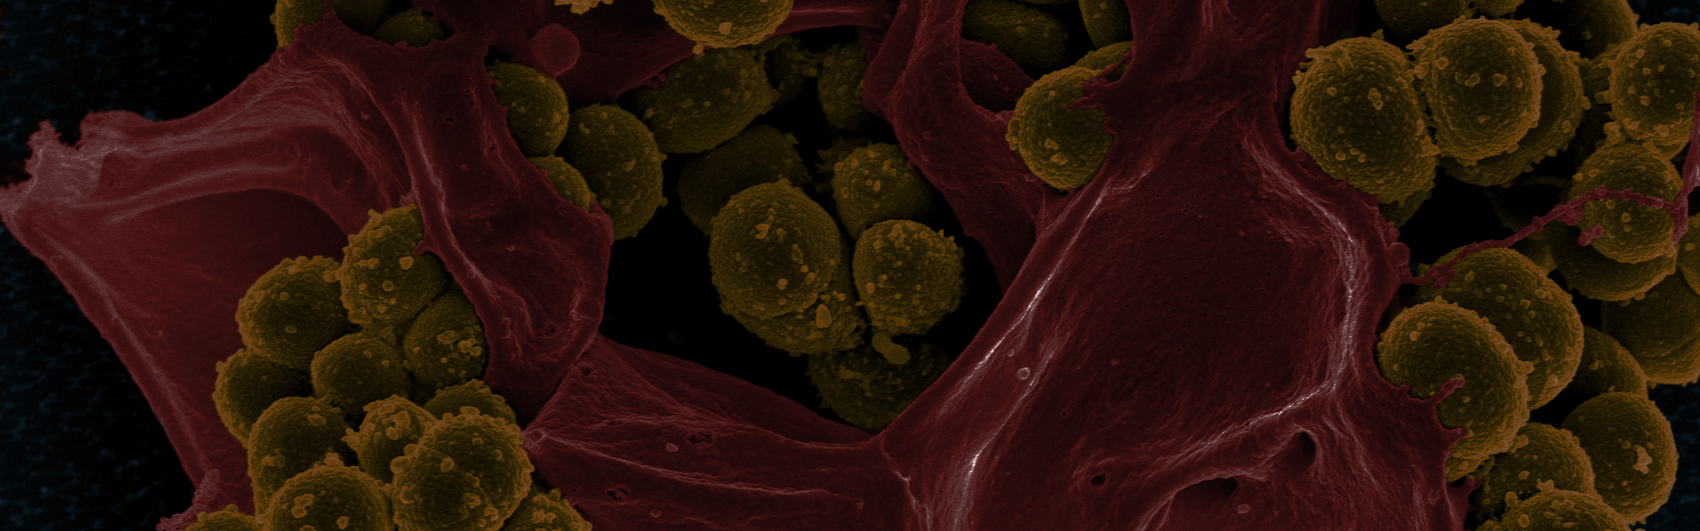 Antimicrobial resistant bacteria Methicillin-resistant Staphylococcus aureus